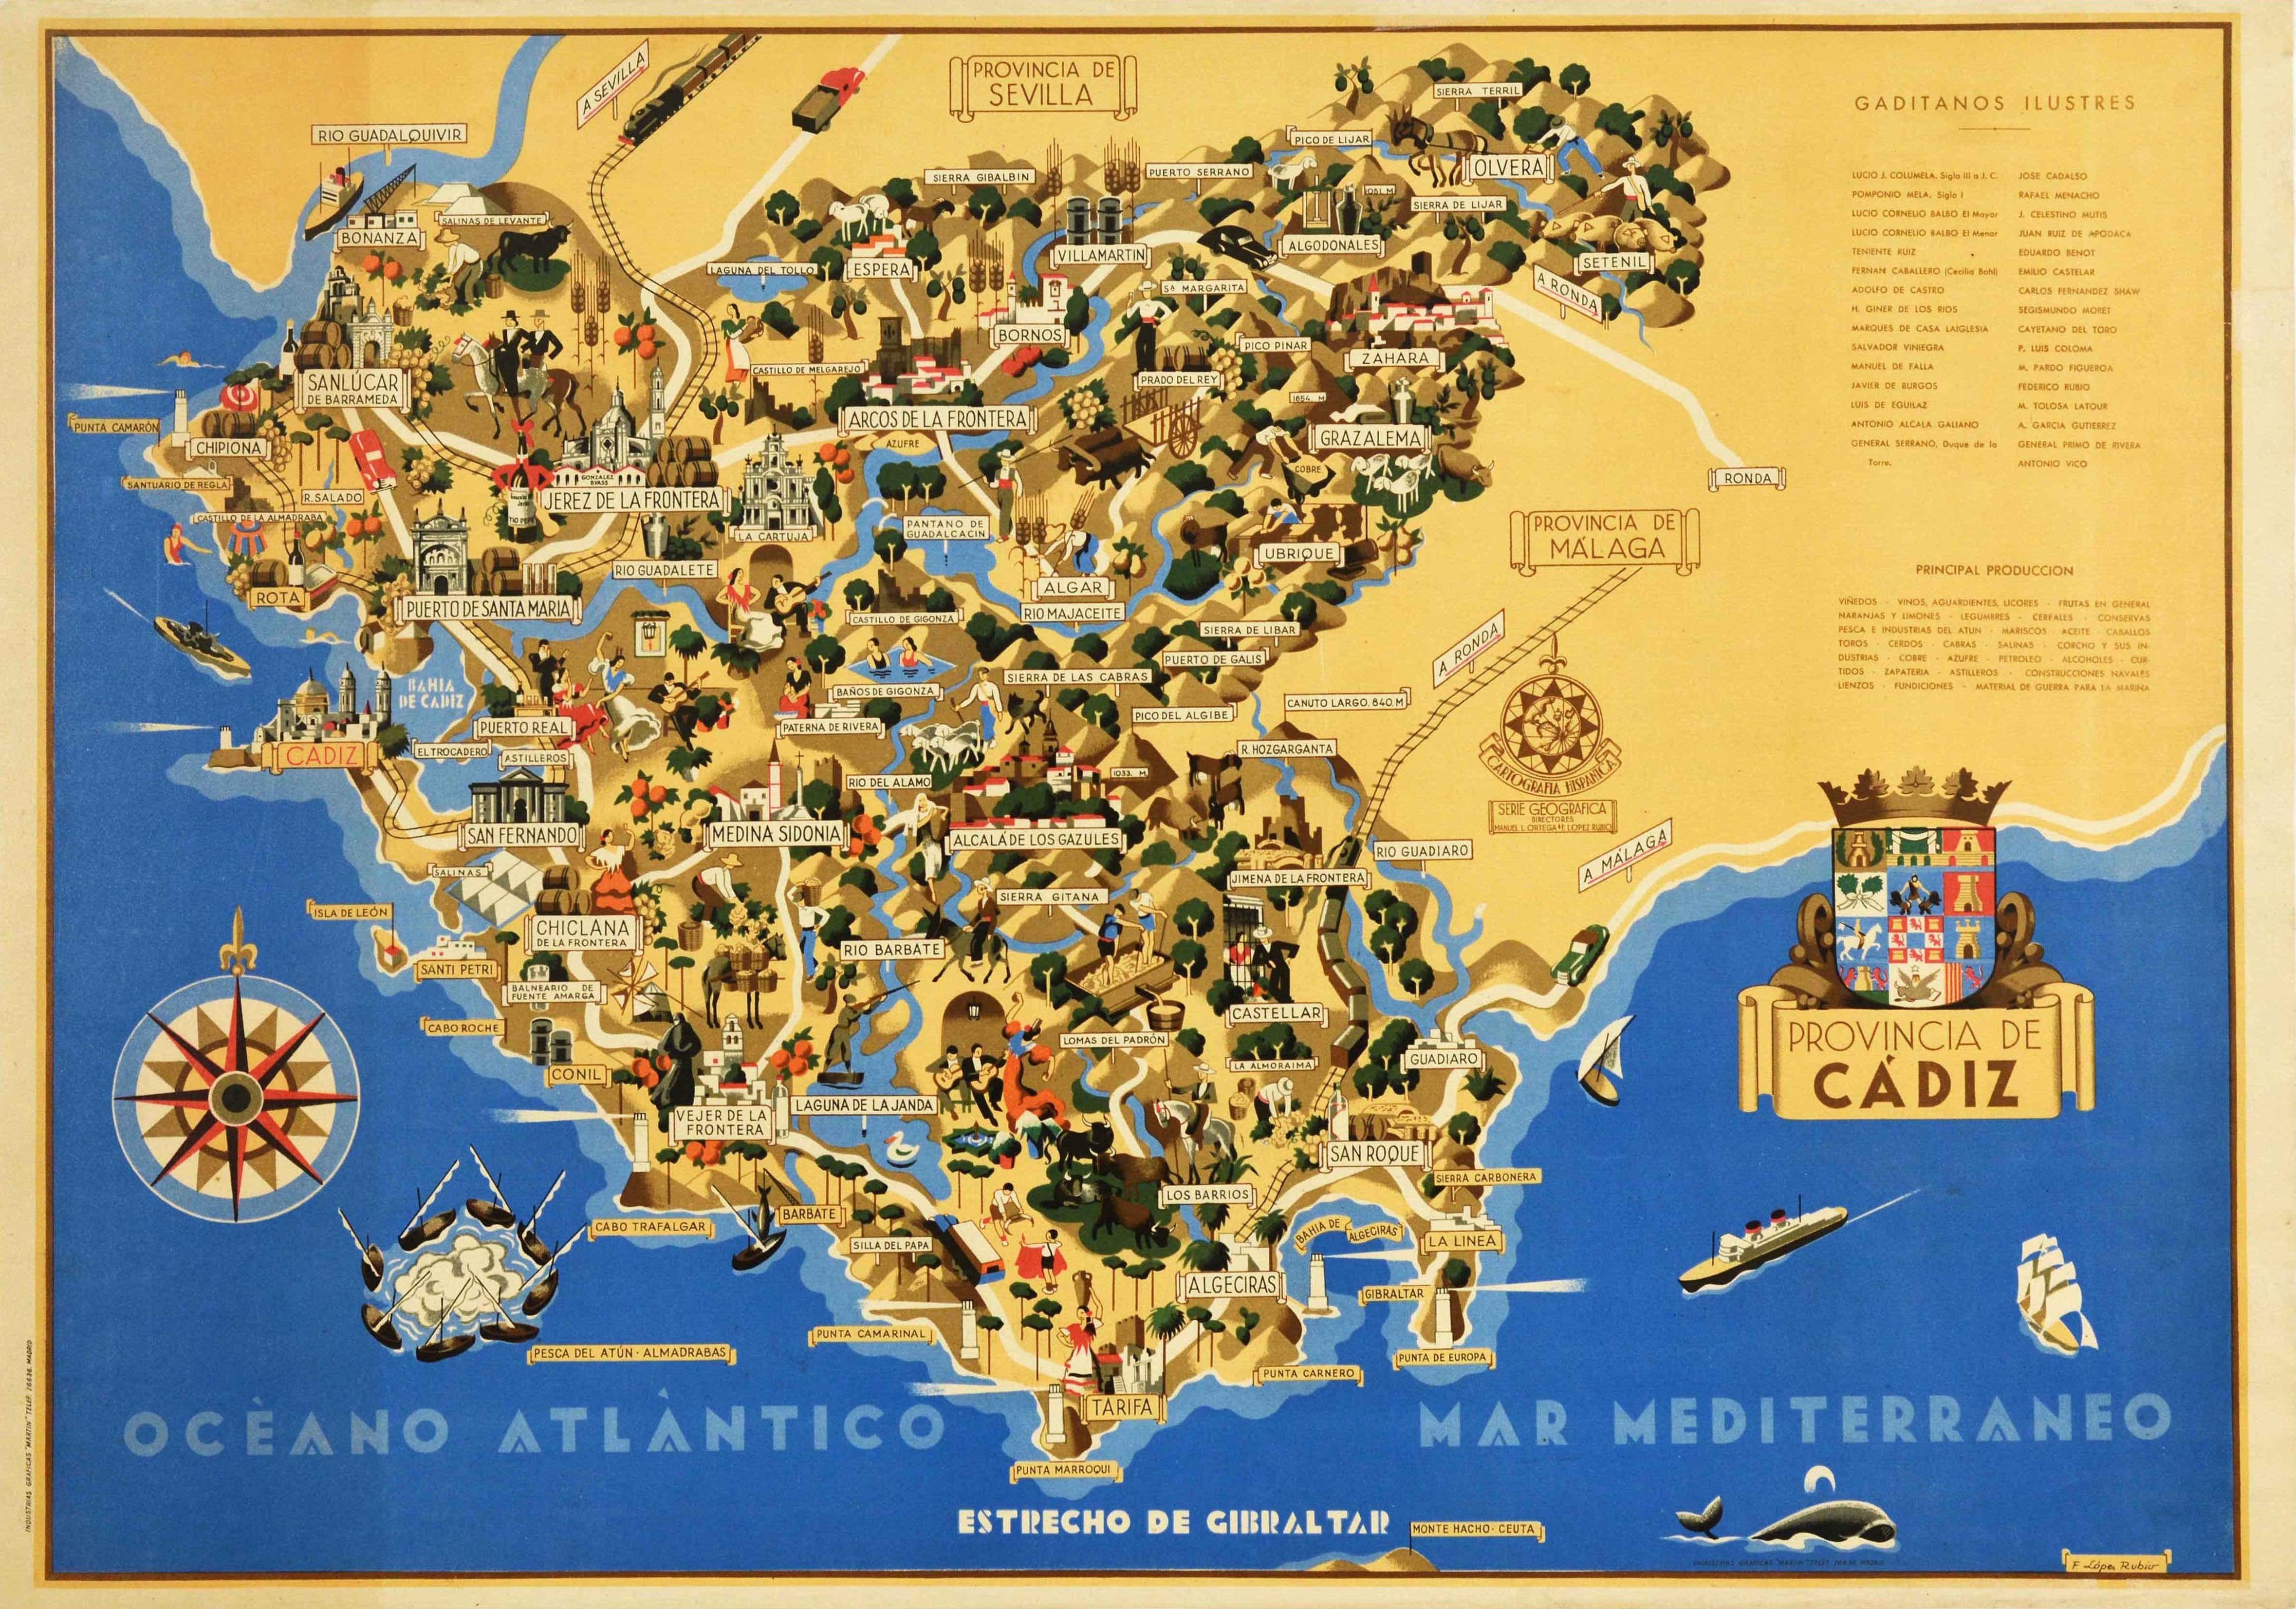 F Lopez Rubio Print - Original Vintage Travel Poster Cadiz Province Illustrated Map Art Deco Spain